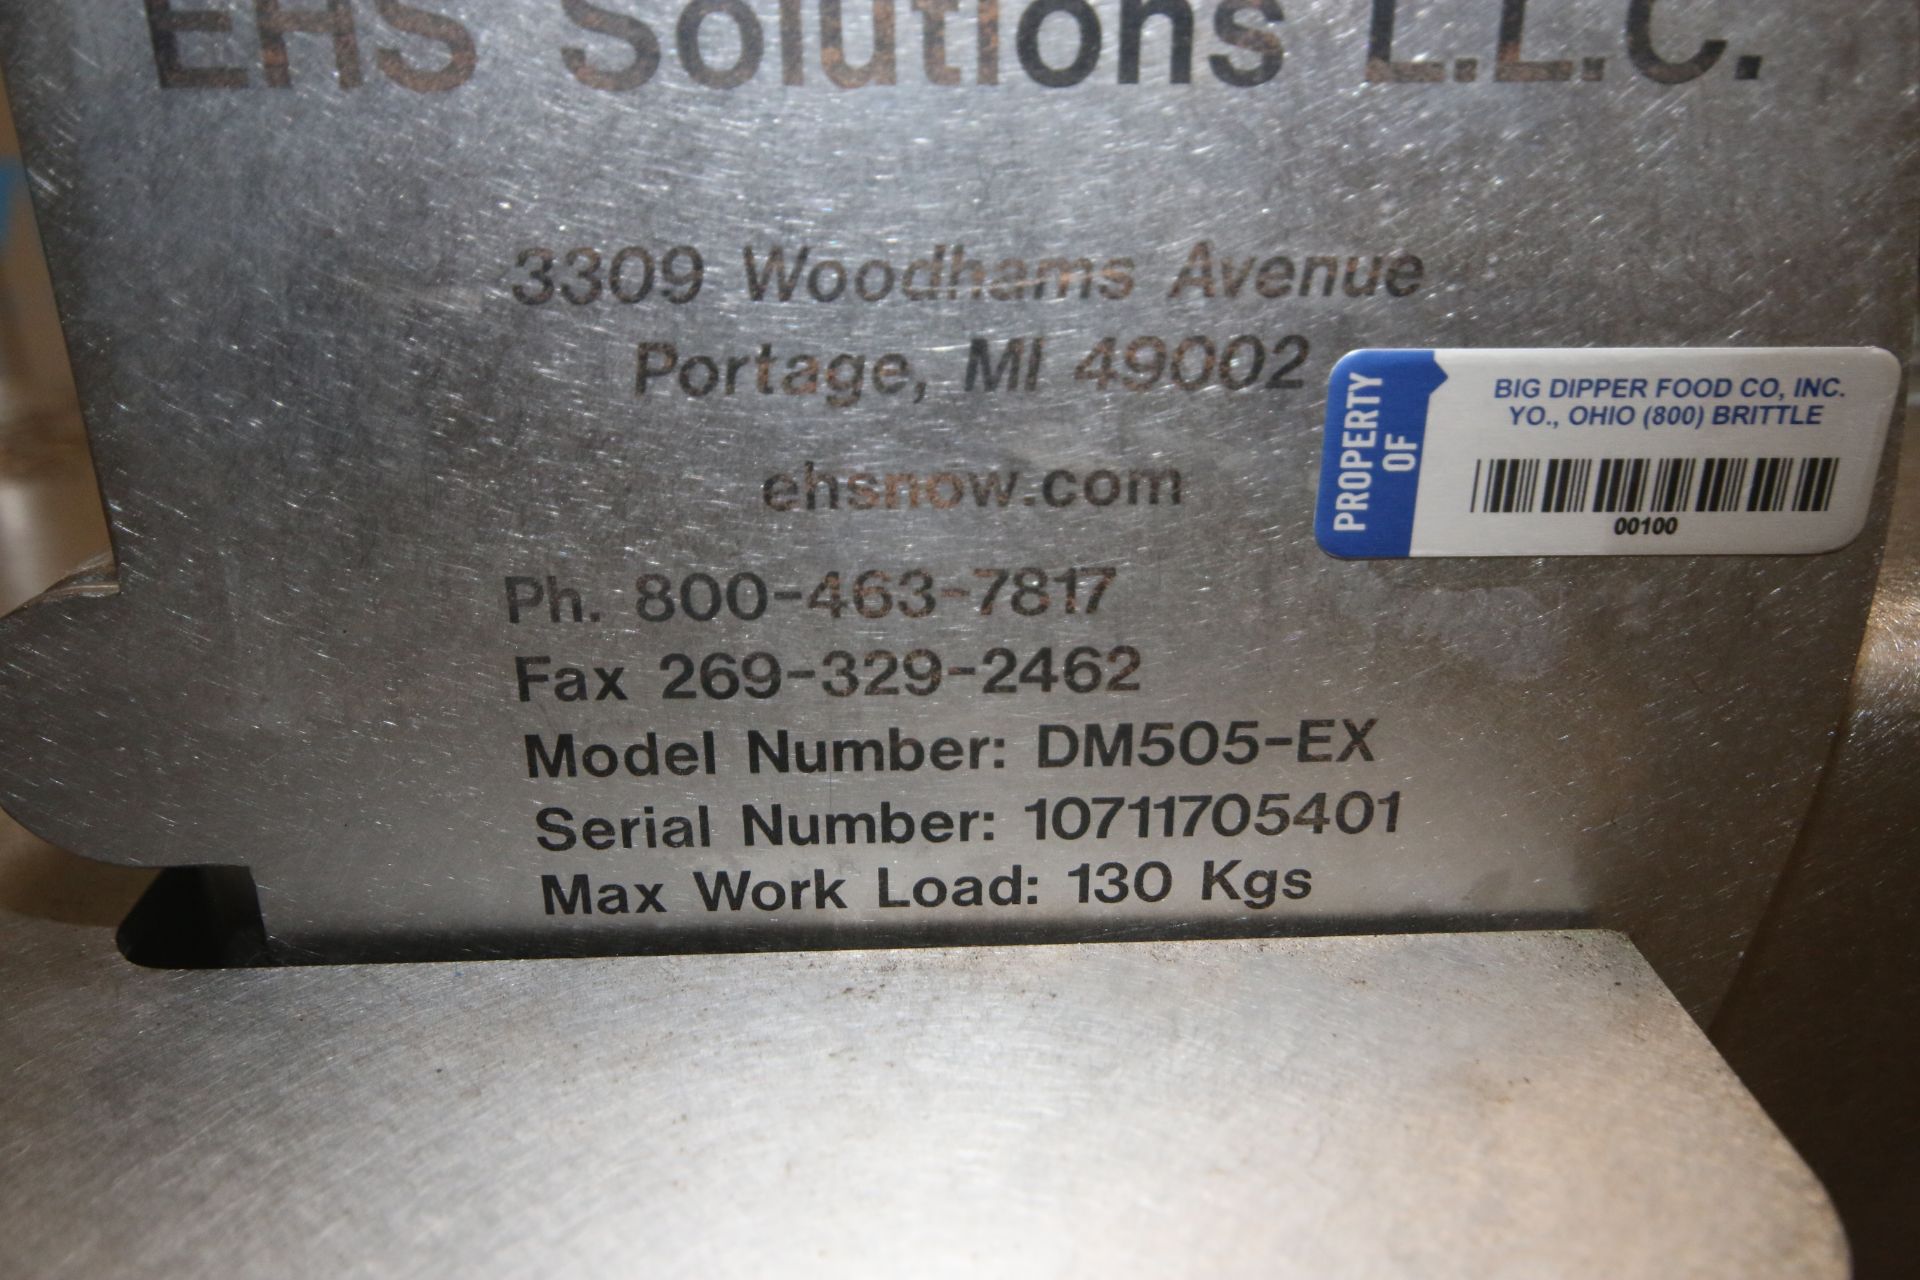 EHS Solutions Inc. S/S Barrel Dumper, M/N DM505-EX, S/N 10711705401, Max. Work Load: 130 Kgs., - Image 8 of 8